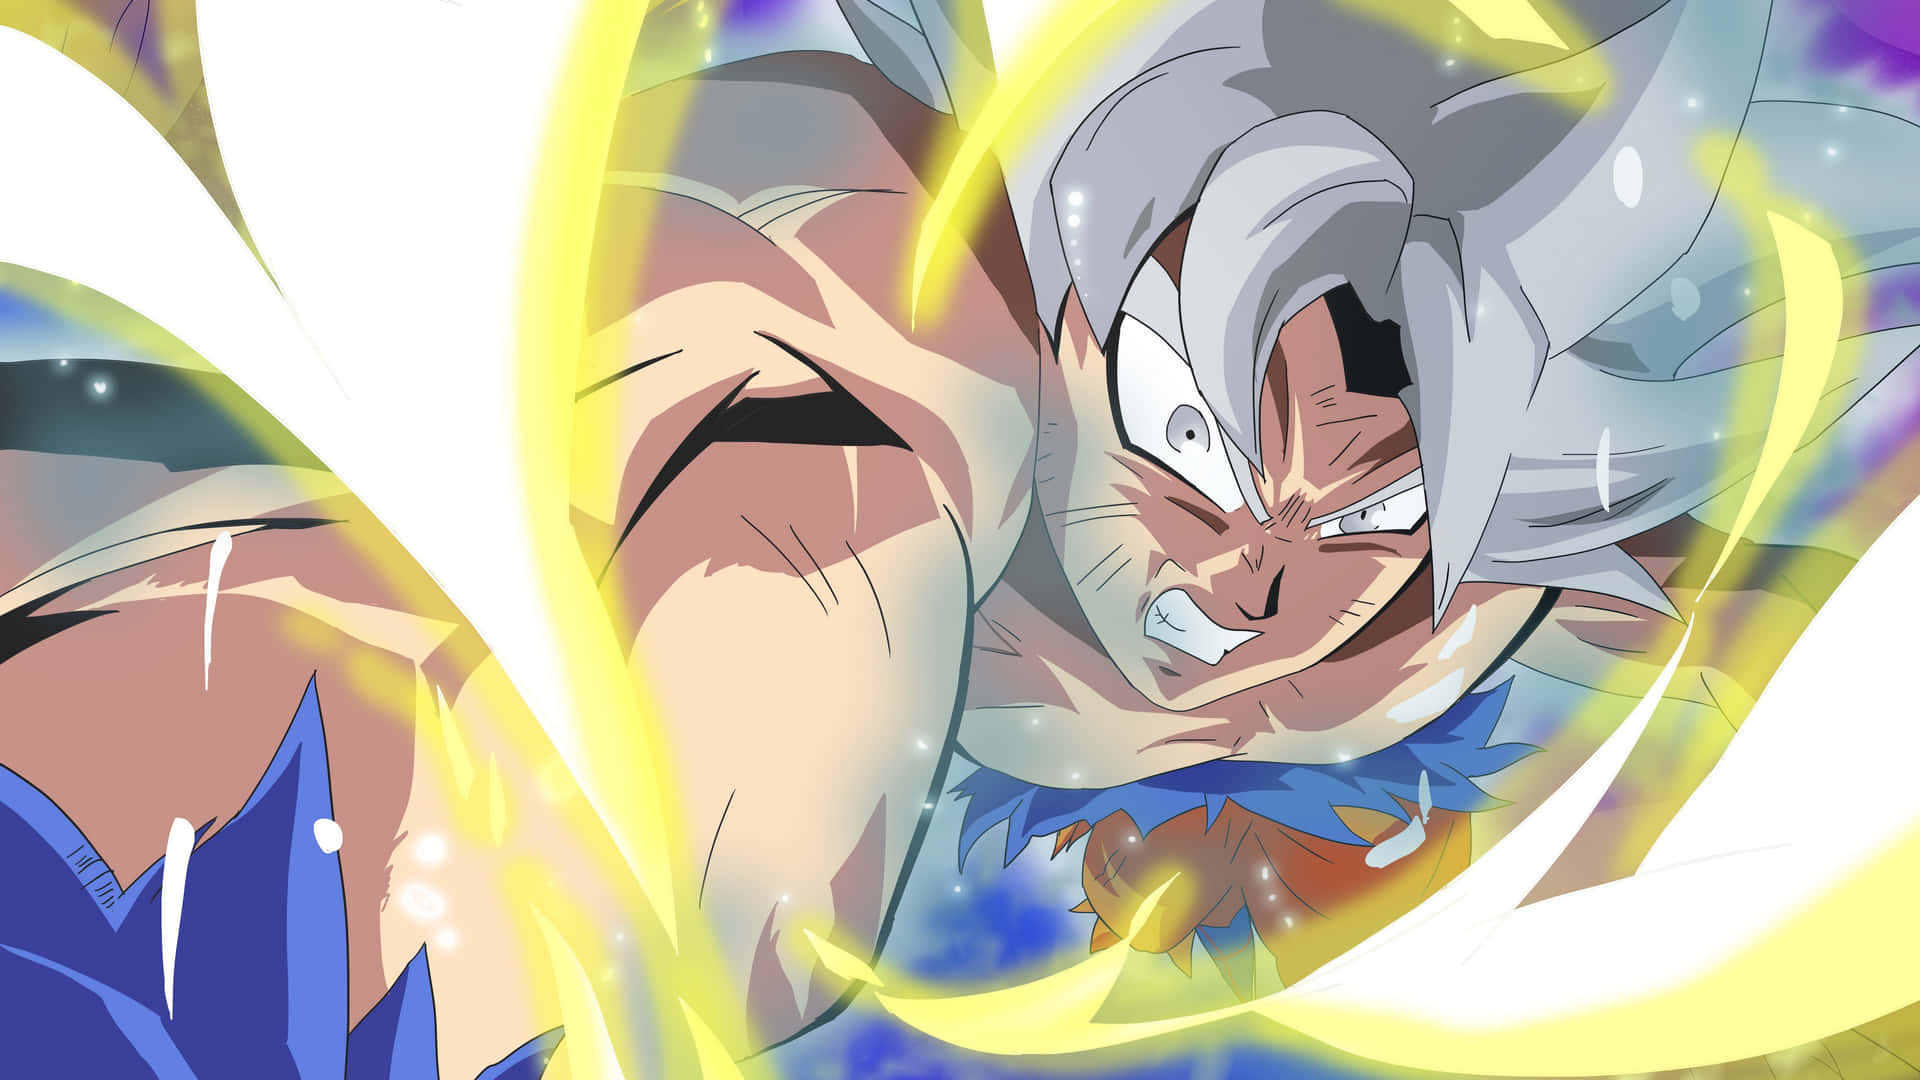 Goku unleashes Ultra Instinct to reach a new peak of power